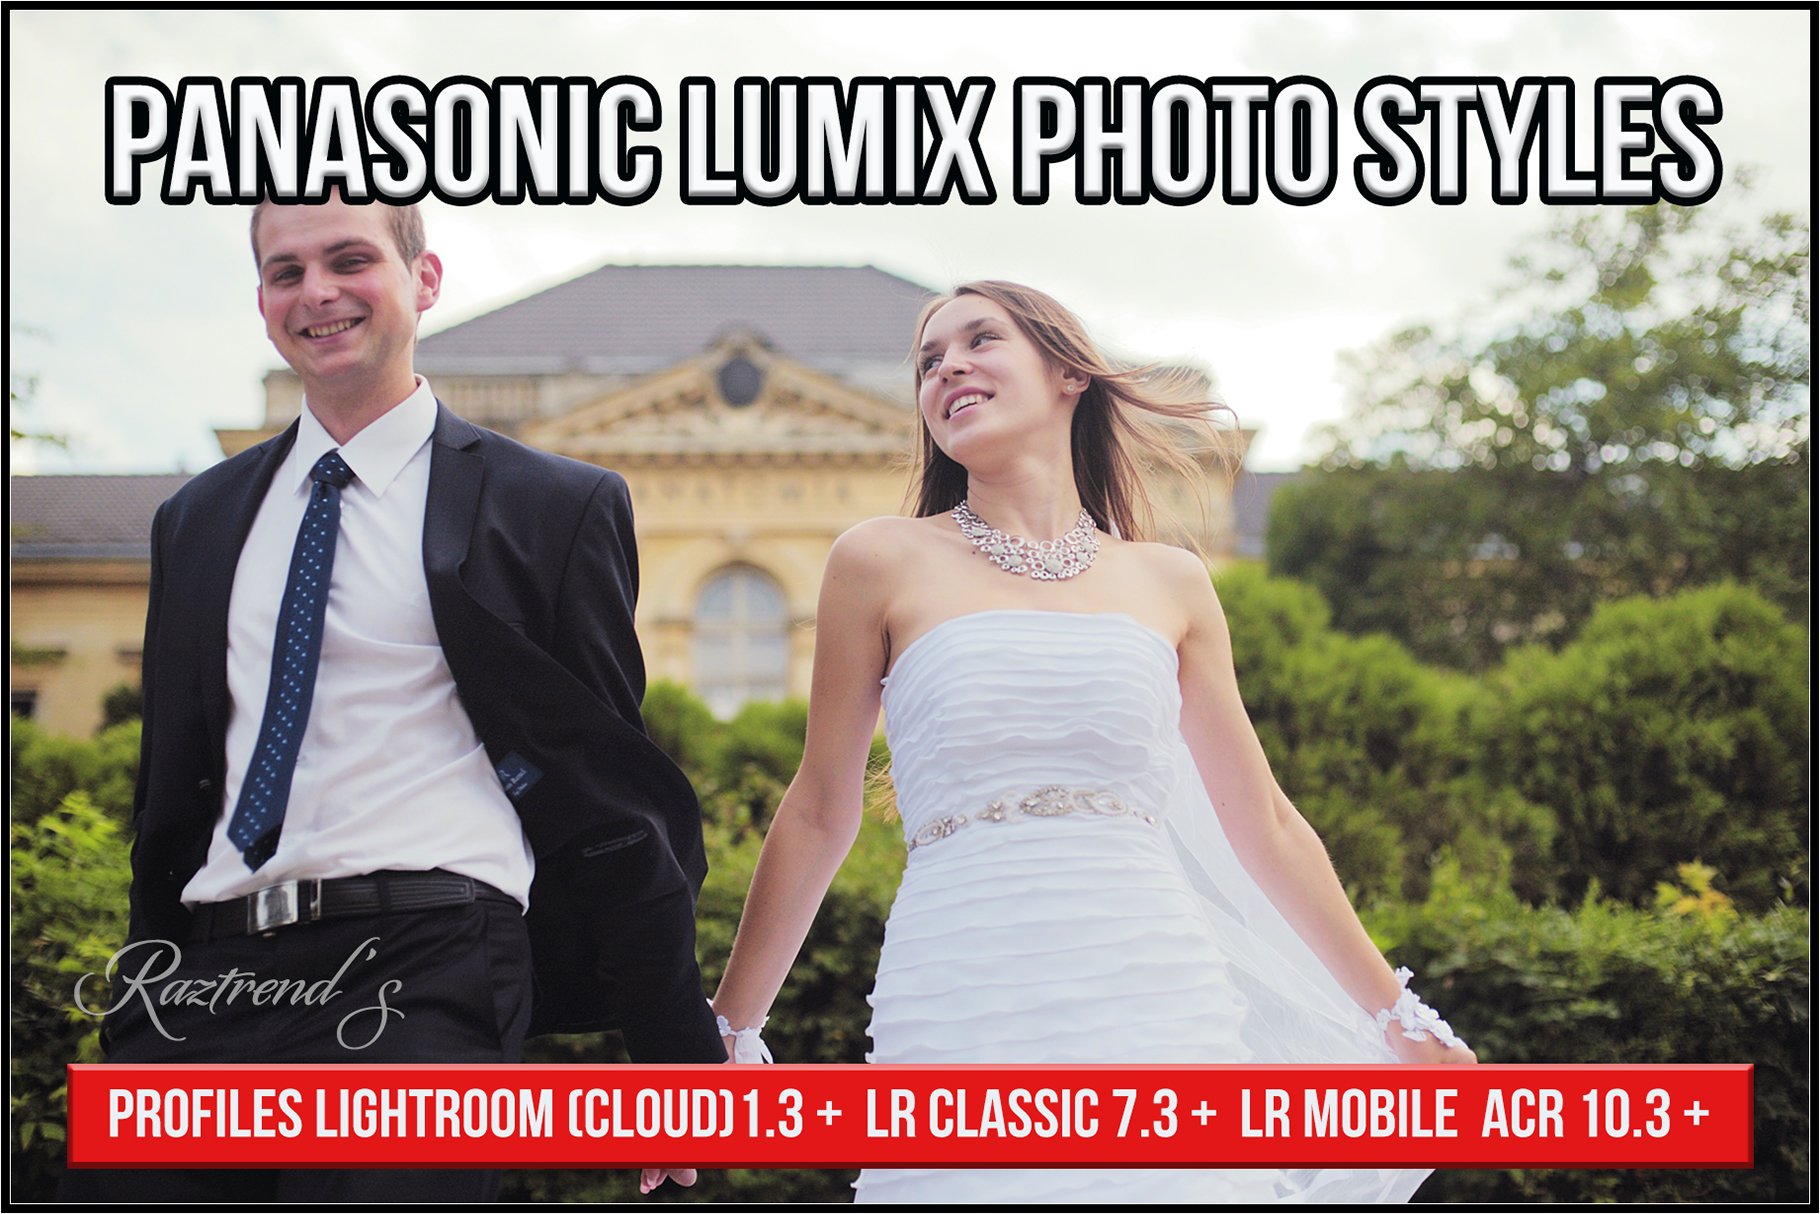 Panasonic Lumix Photo Style profilescover image.